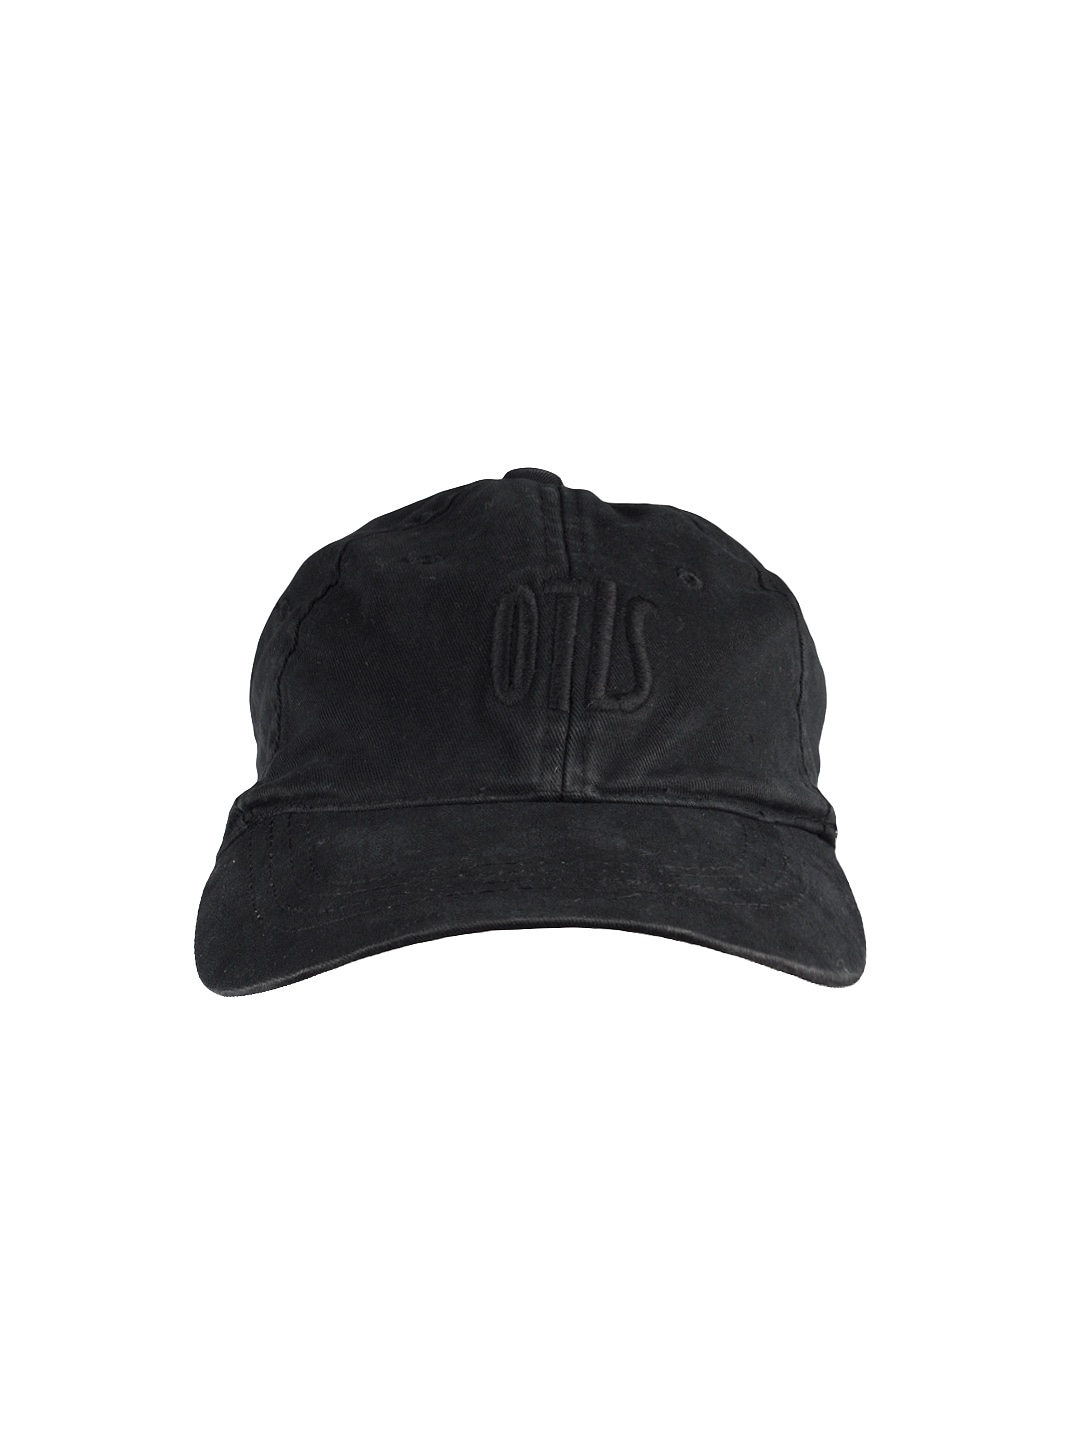 OTLS Unisex Black Polo Cap